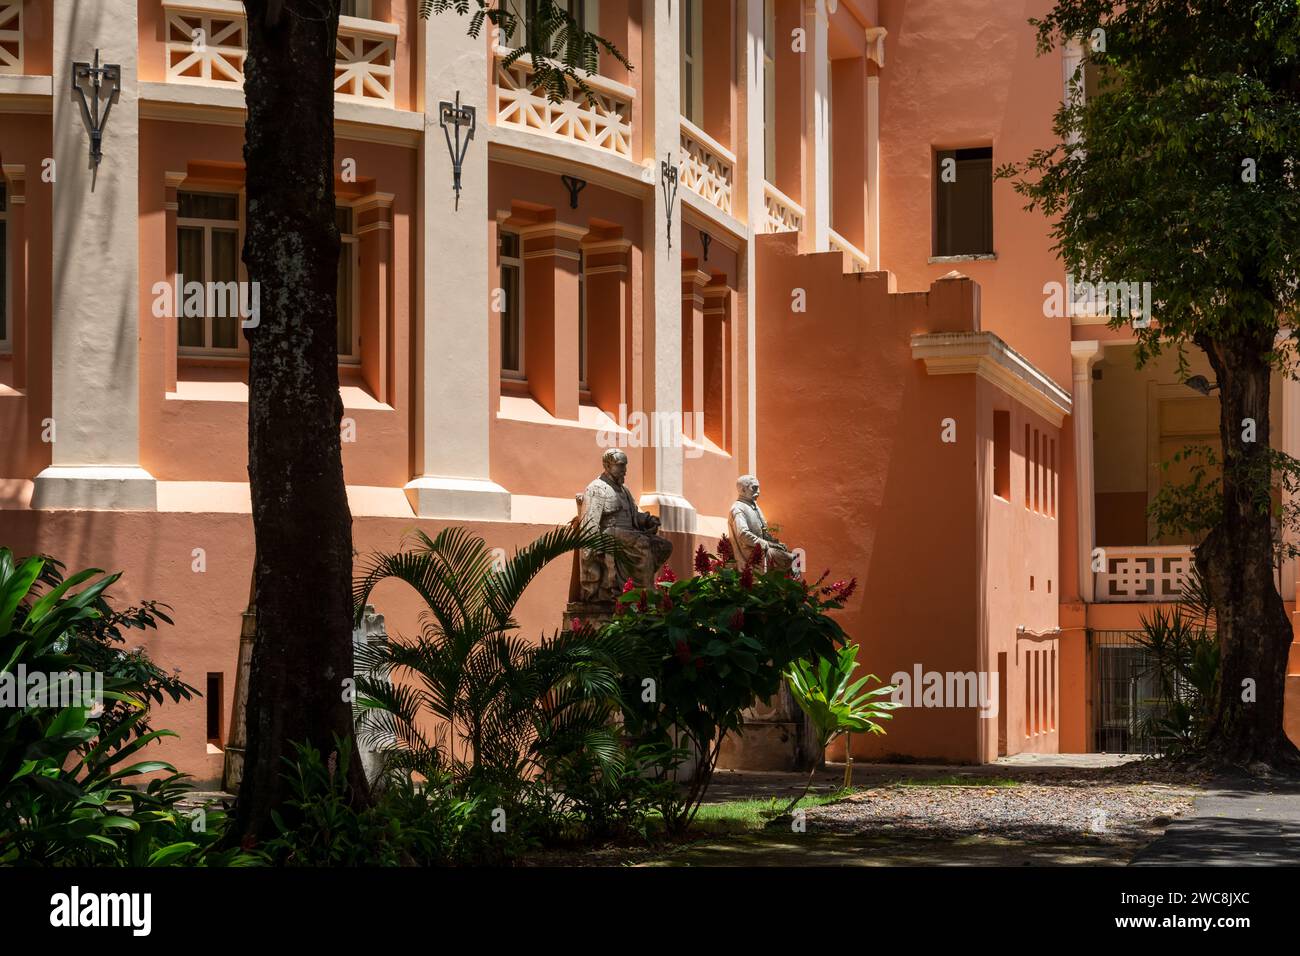 Salvador, Bahia, Brasilien - 07. März 2015: Blick auf die Fassade des alten Medizinstudiums in der Stadt Salvador, Bahia. Stockfoto